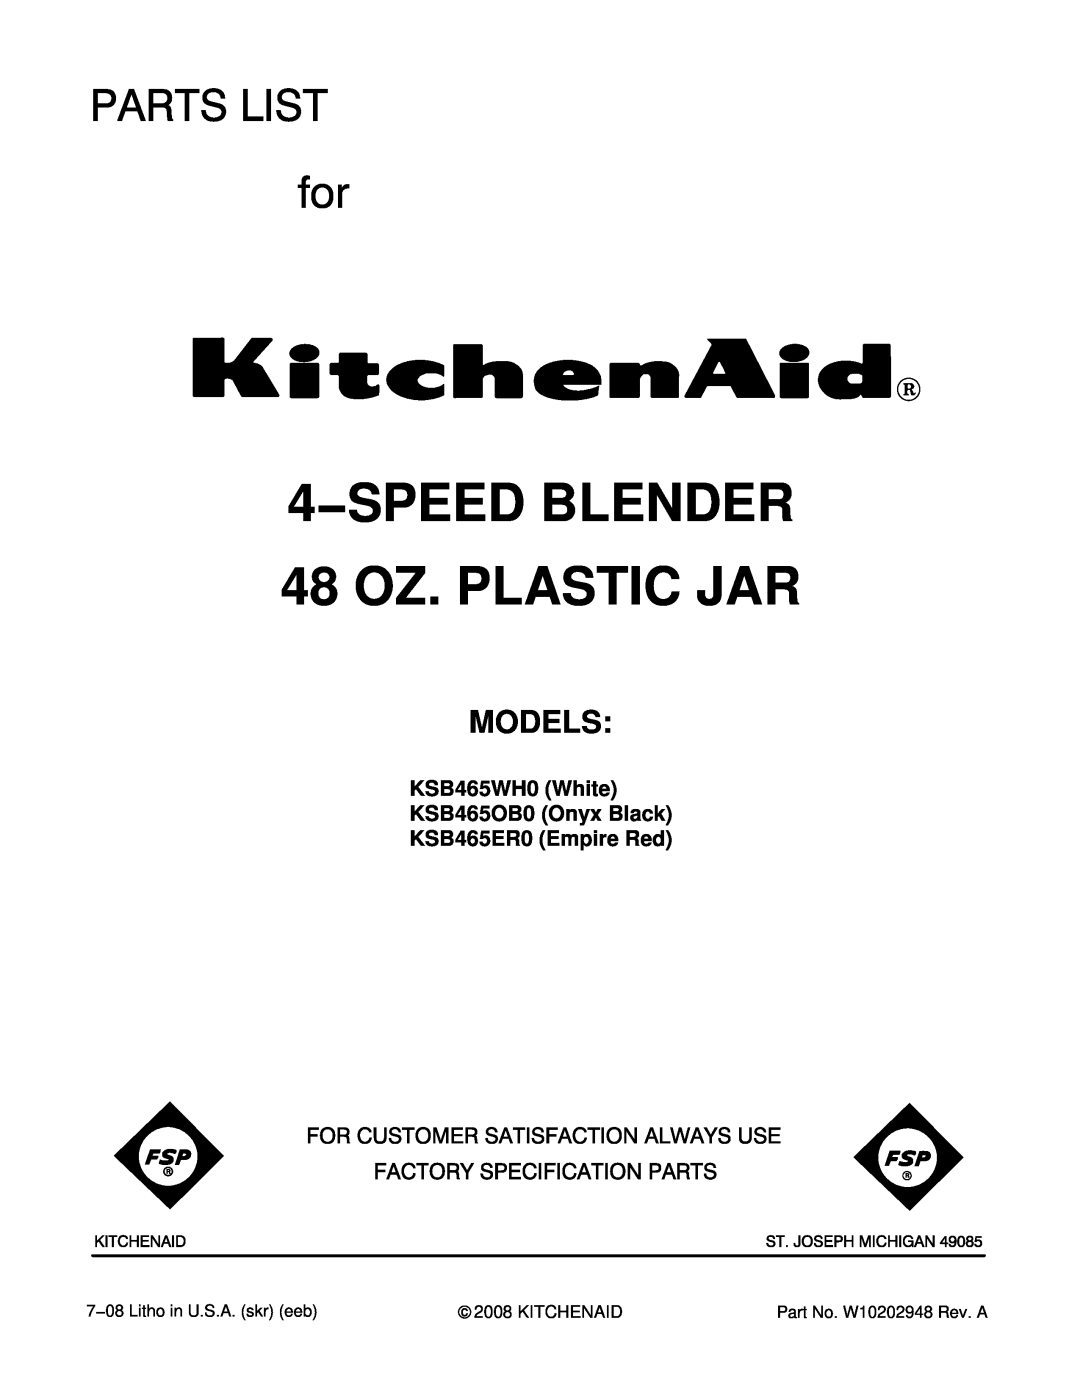 KitchenAid manual Models, KSB465WH0 White KSB465OB0 Onyx Black KSB465ER0 Empire Red, 4−SPEED BLENDER 48 OZ. PLASTIC JAR 